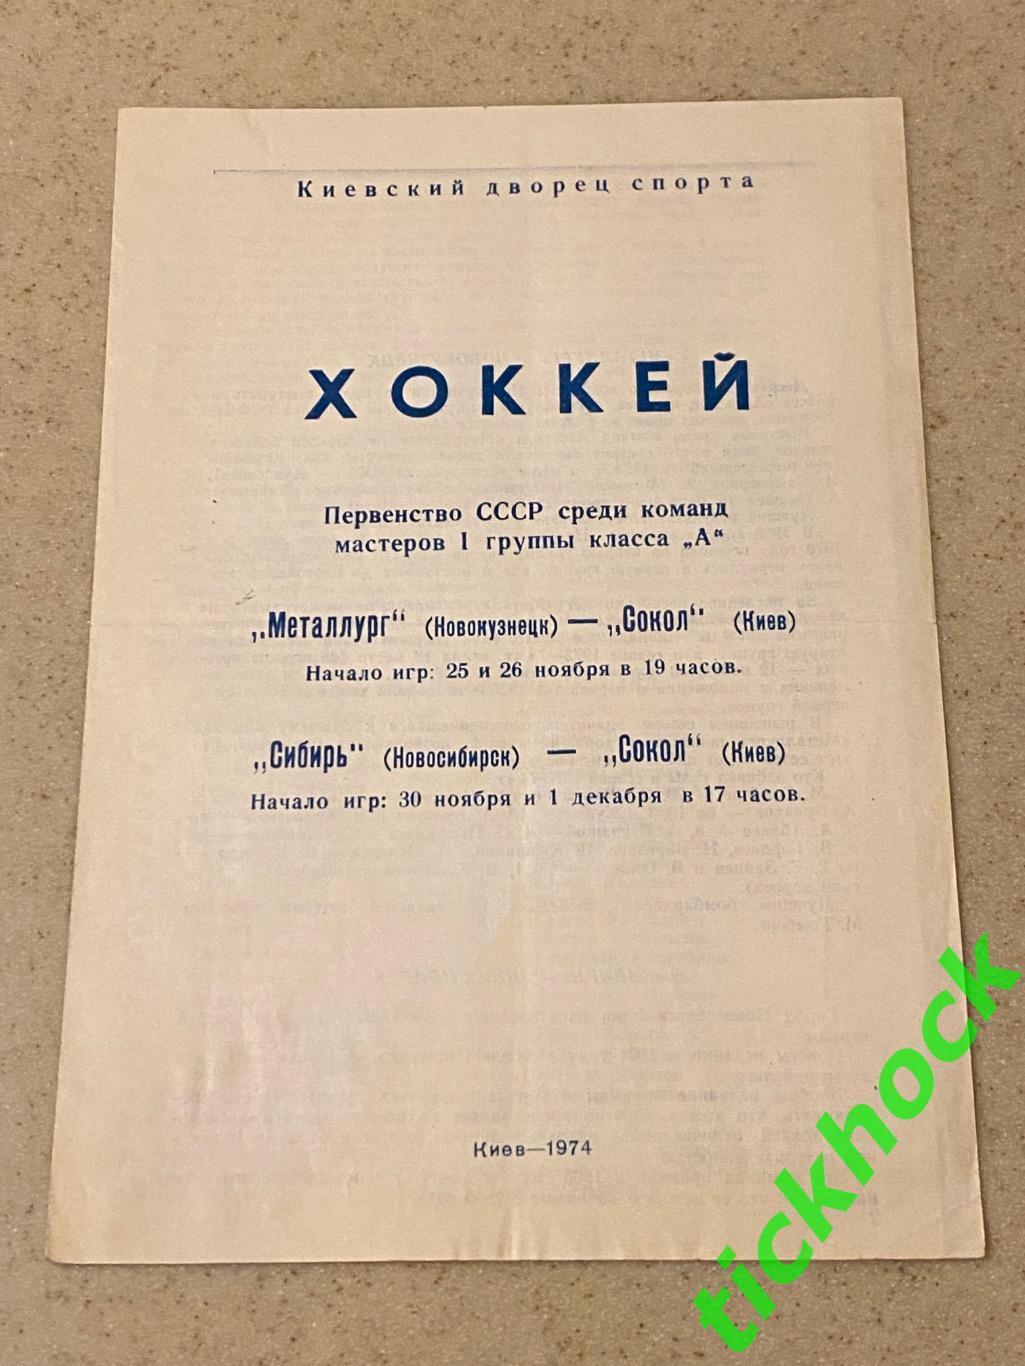 Сокол Киев -- Сибирь Новосибирск и Металлург Новокузнецк 1974- на 4 игры - SY